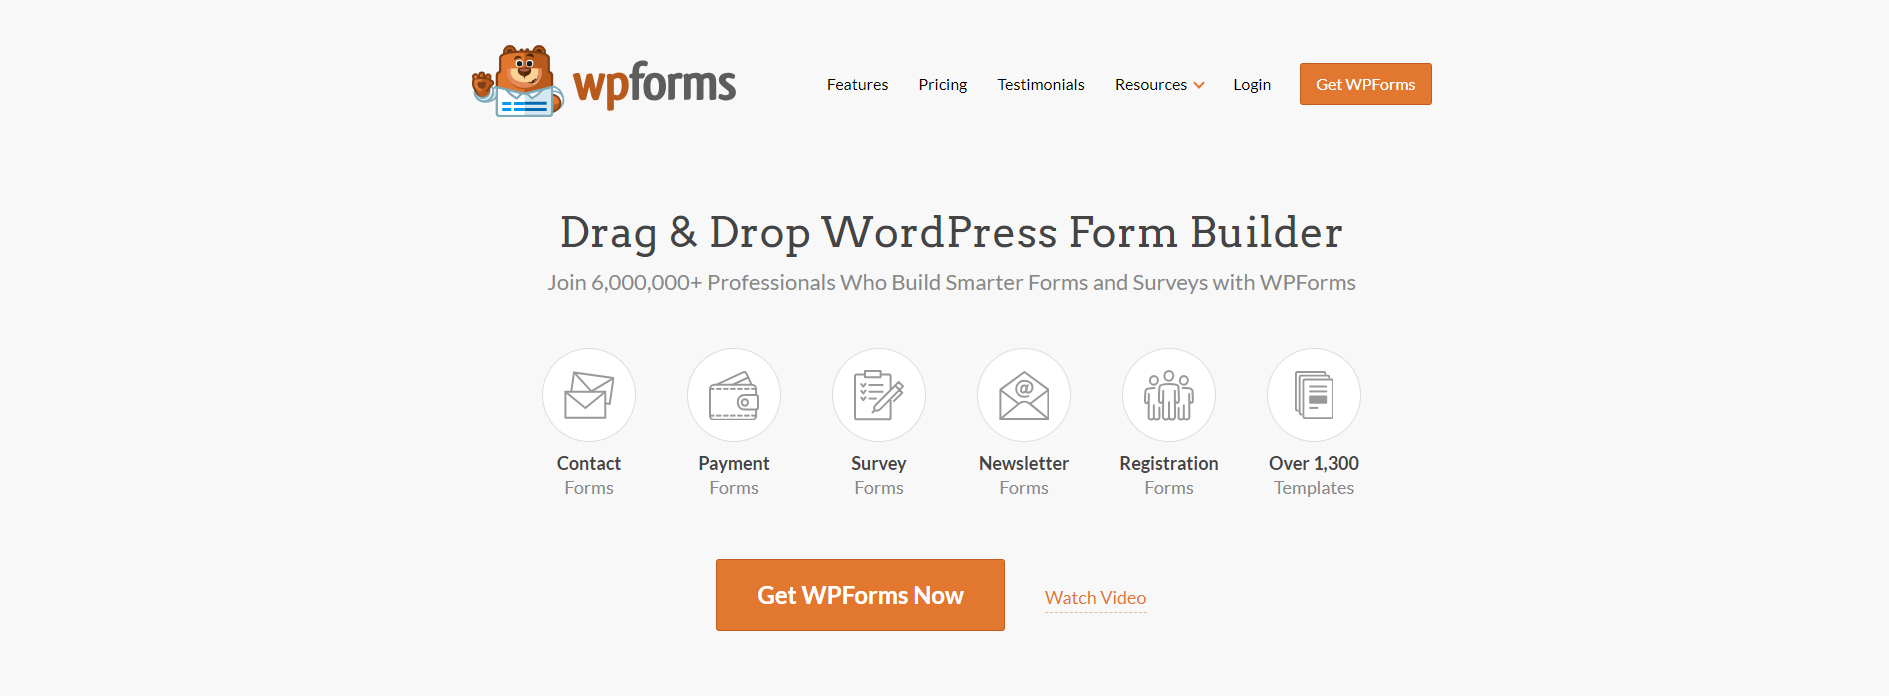 WordPress Form Builder Plugins